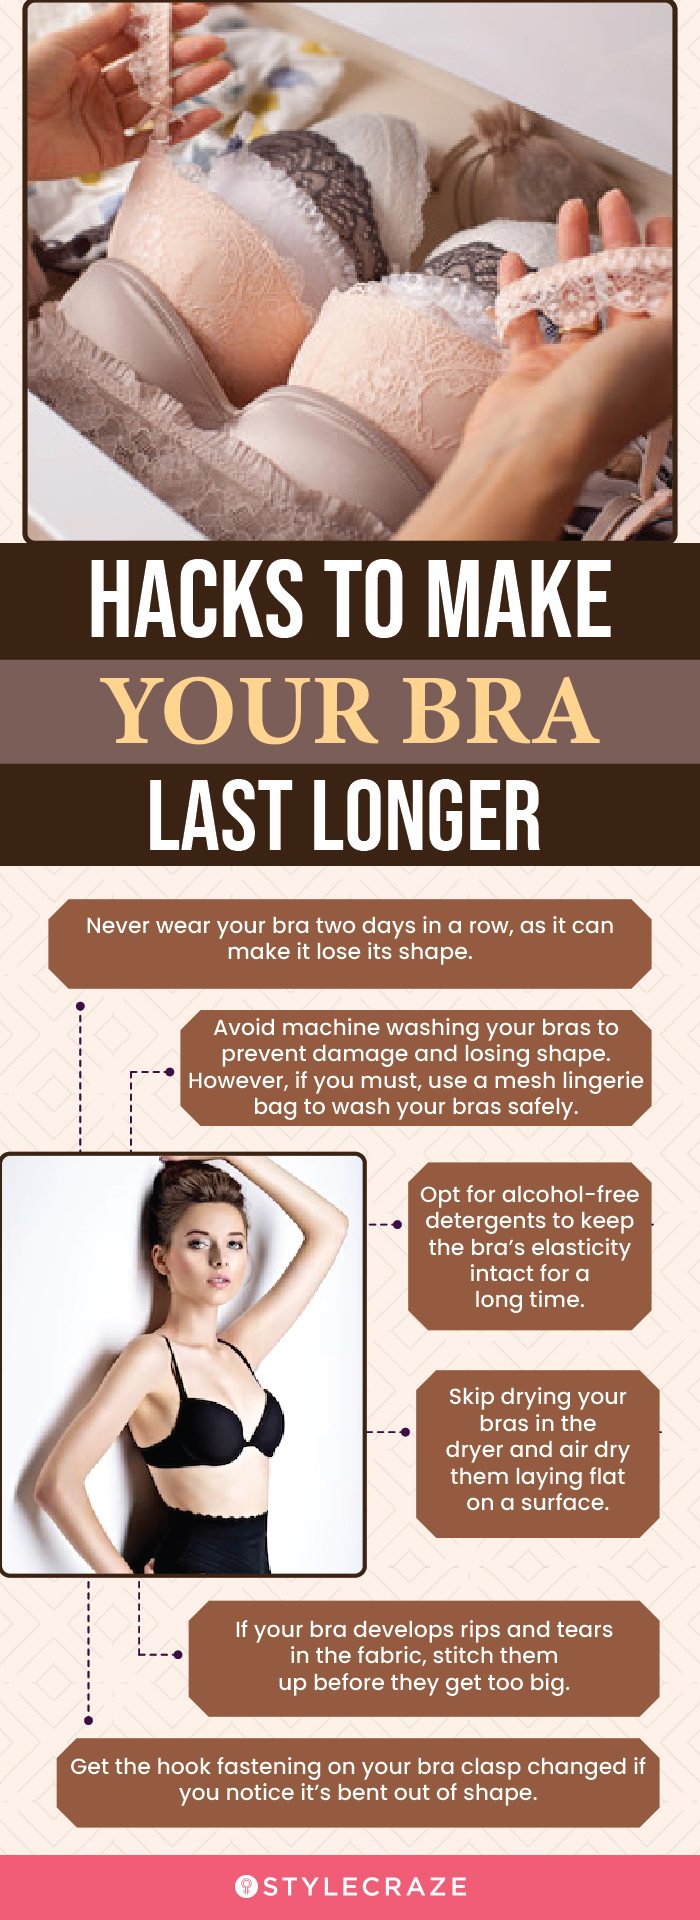 Hacks To Make Your Bra Last Longer (infographic)